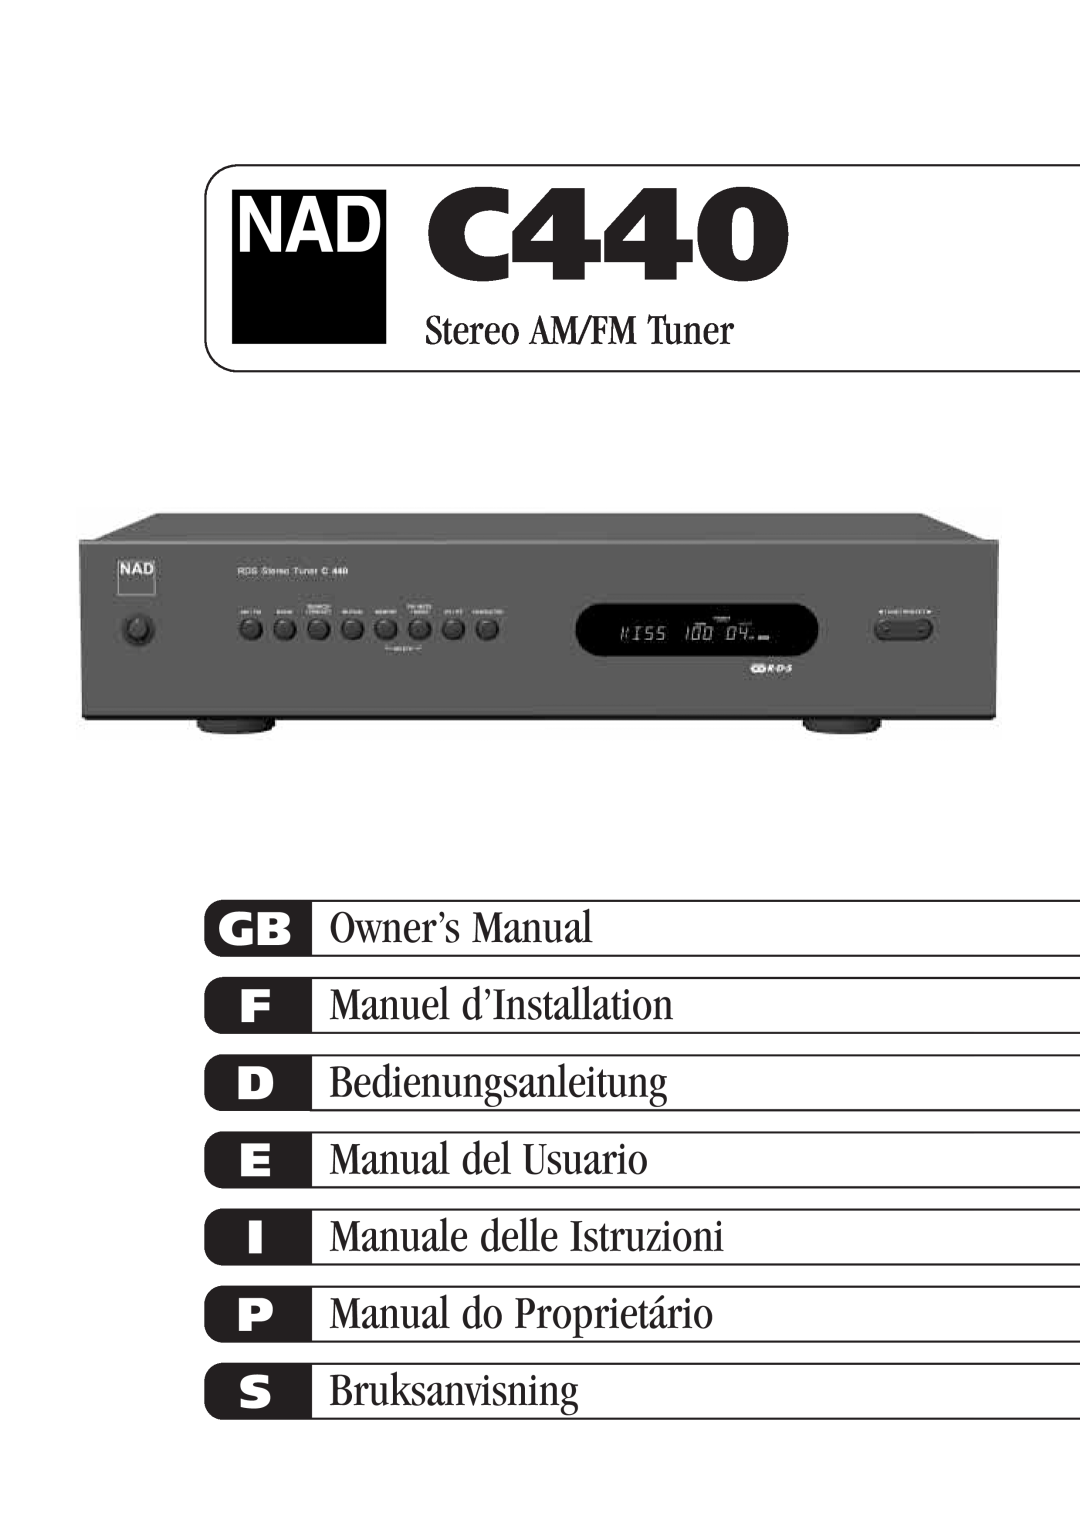 NAD C440 owner manual Gb F D E I P S, Bedienungsanleitung Manual del Usuario, Bruksanvisning, Stereo AM/FM Tuner 